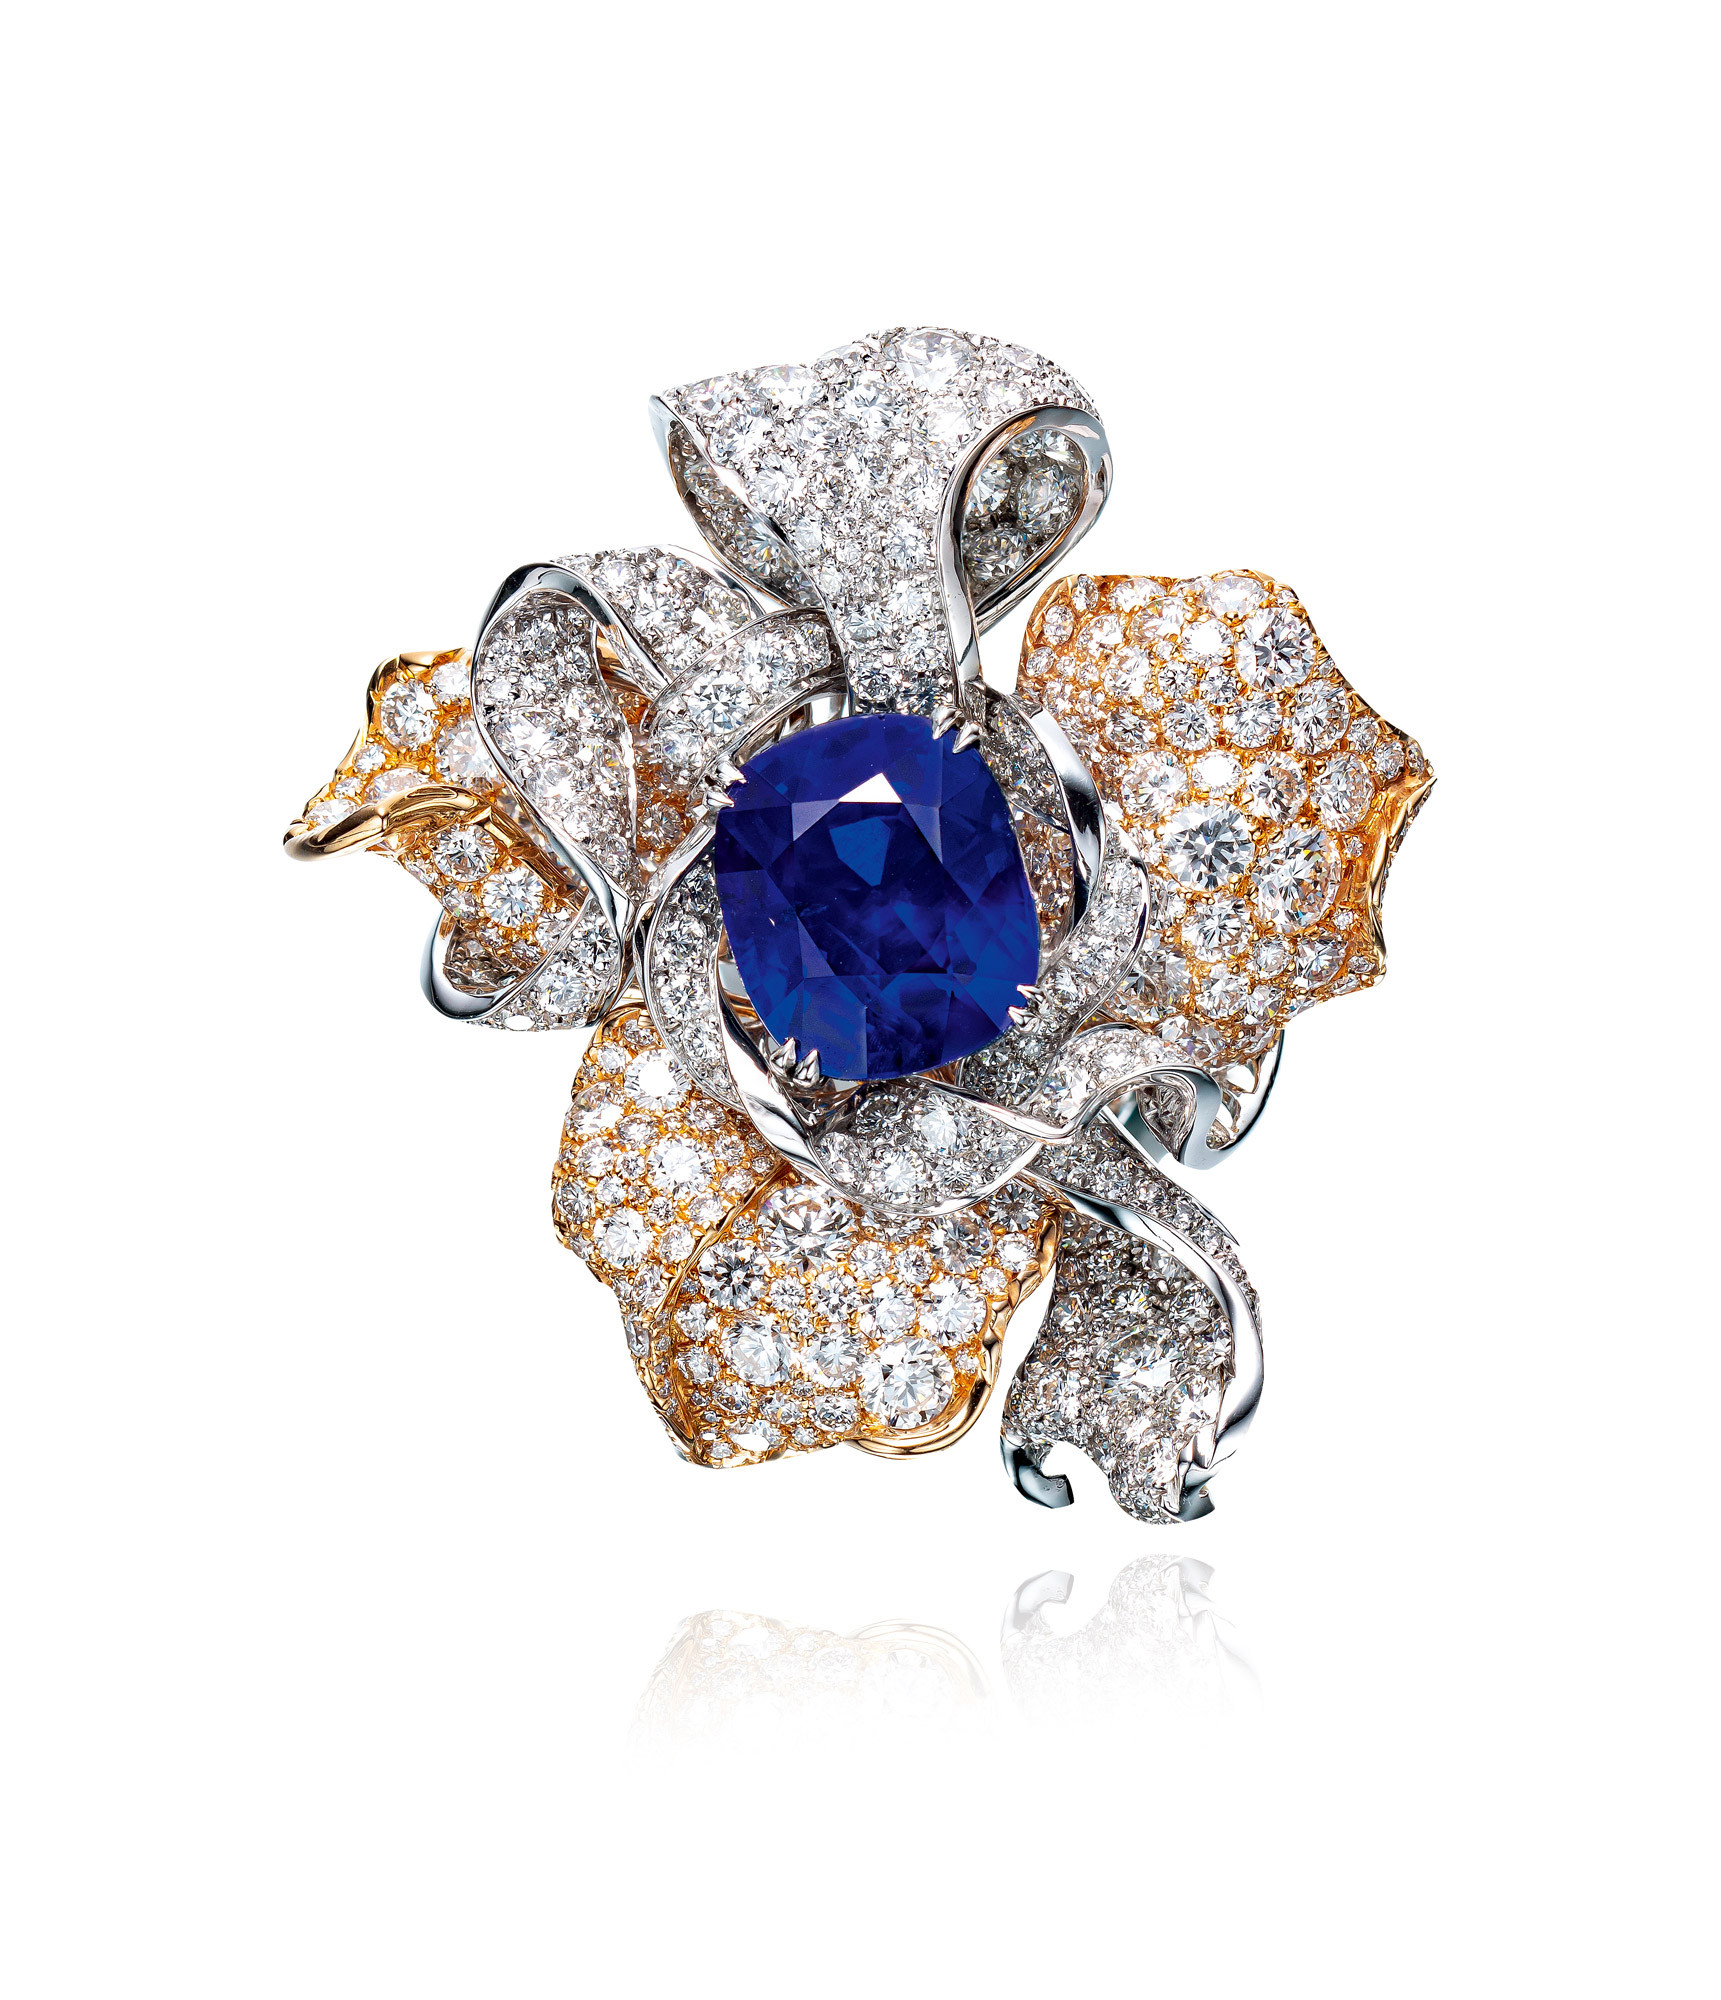 A 14.03 CARAT BURMESE ‘ROYAL BLUE’ SAPPHIRE AND DIAMOND RING，‘PETALES D’AMOUR’，BY ANNA HU